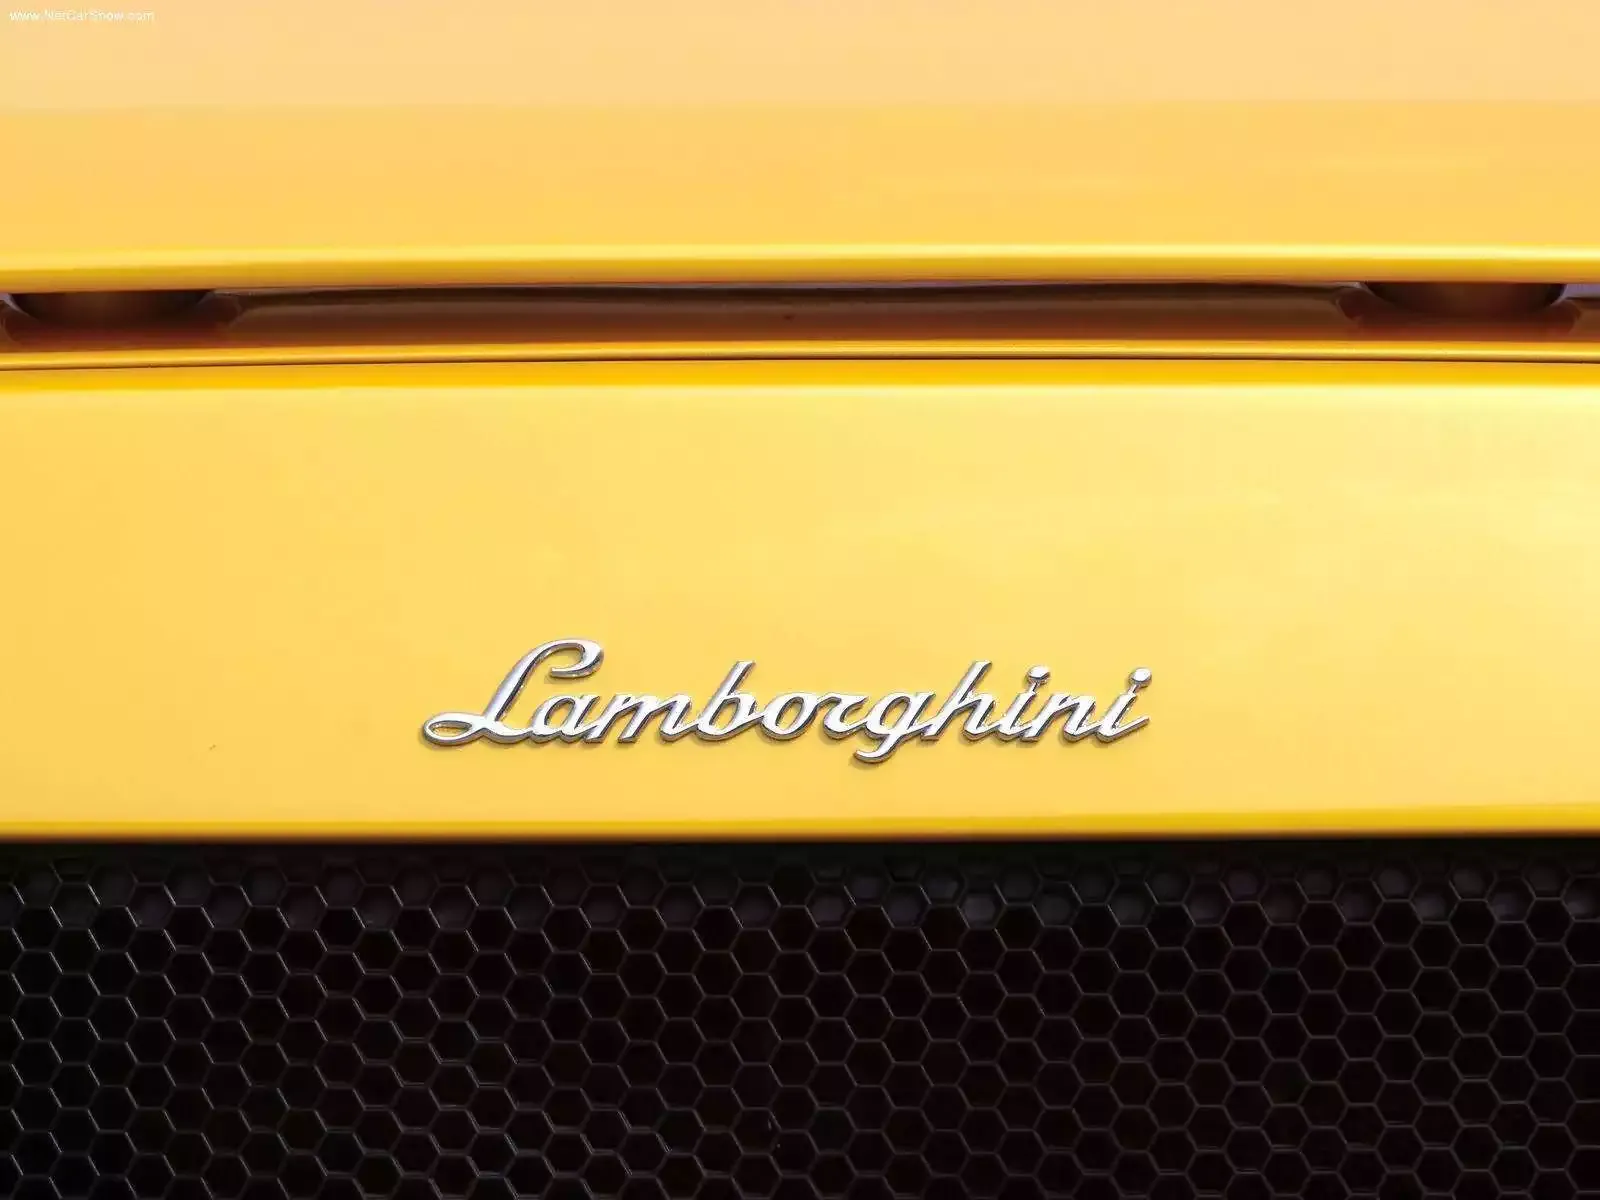 Hình ảnh siêu xe Lamborghini Gallardo 2003 & nội ngoại thất